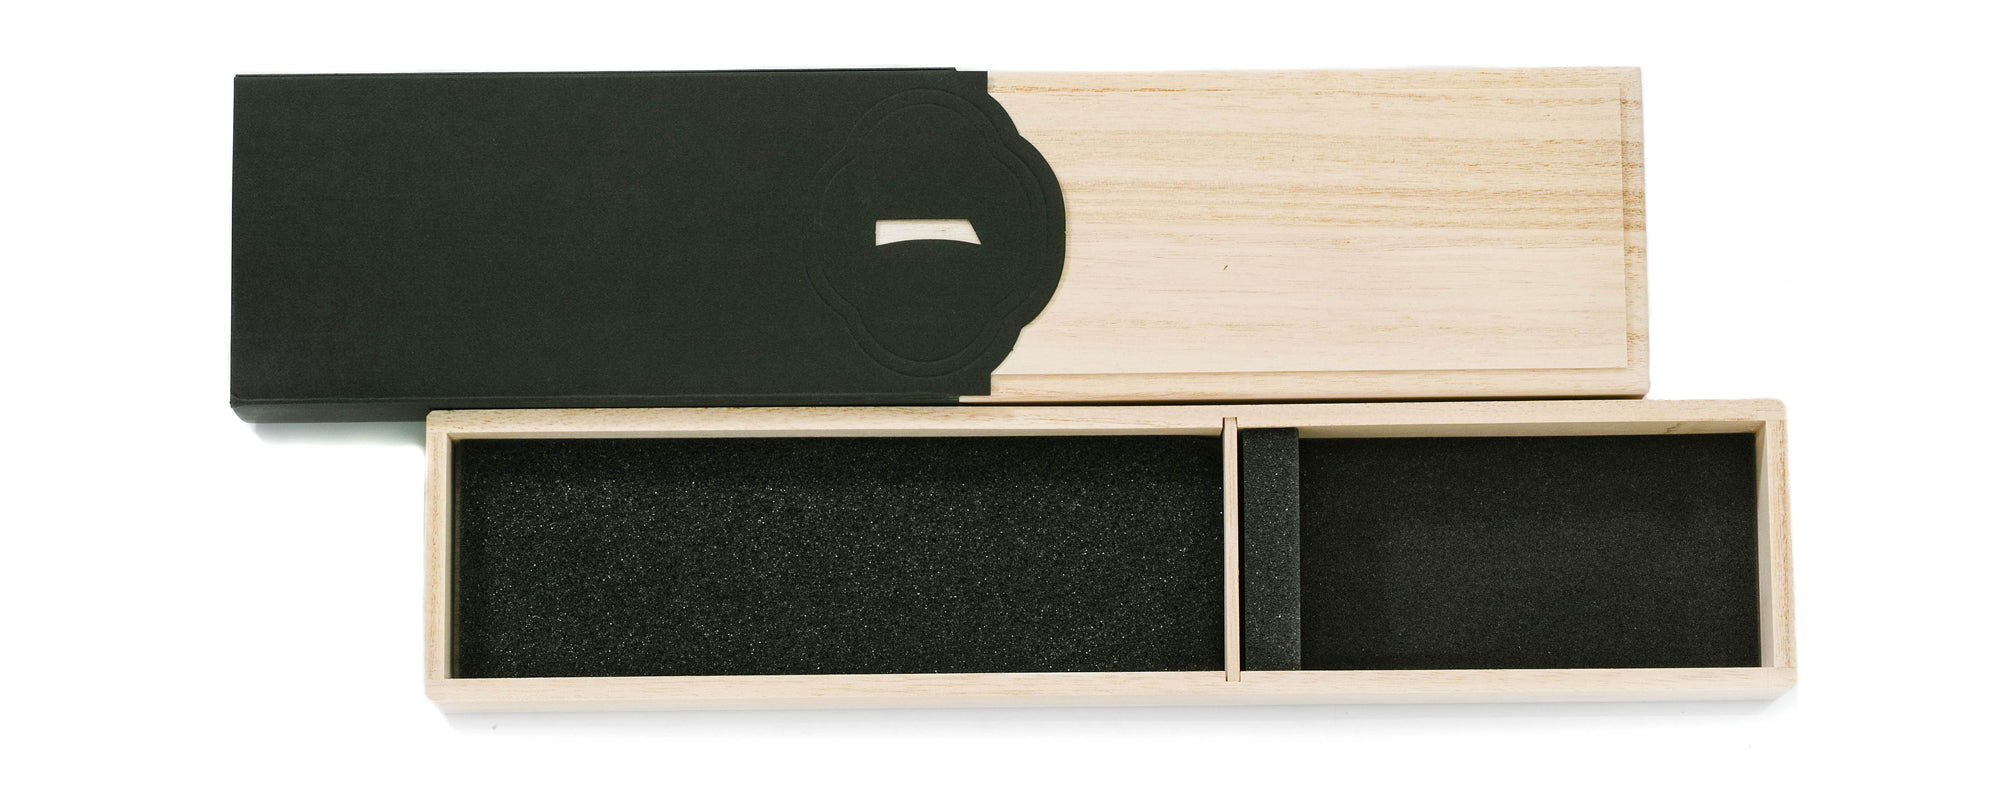 Wooden Gift Box for Santoku